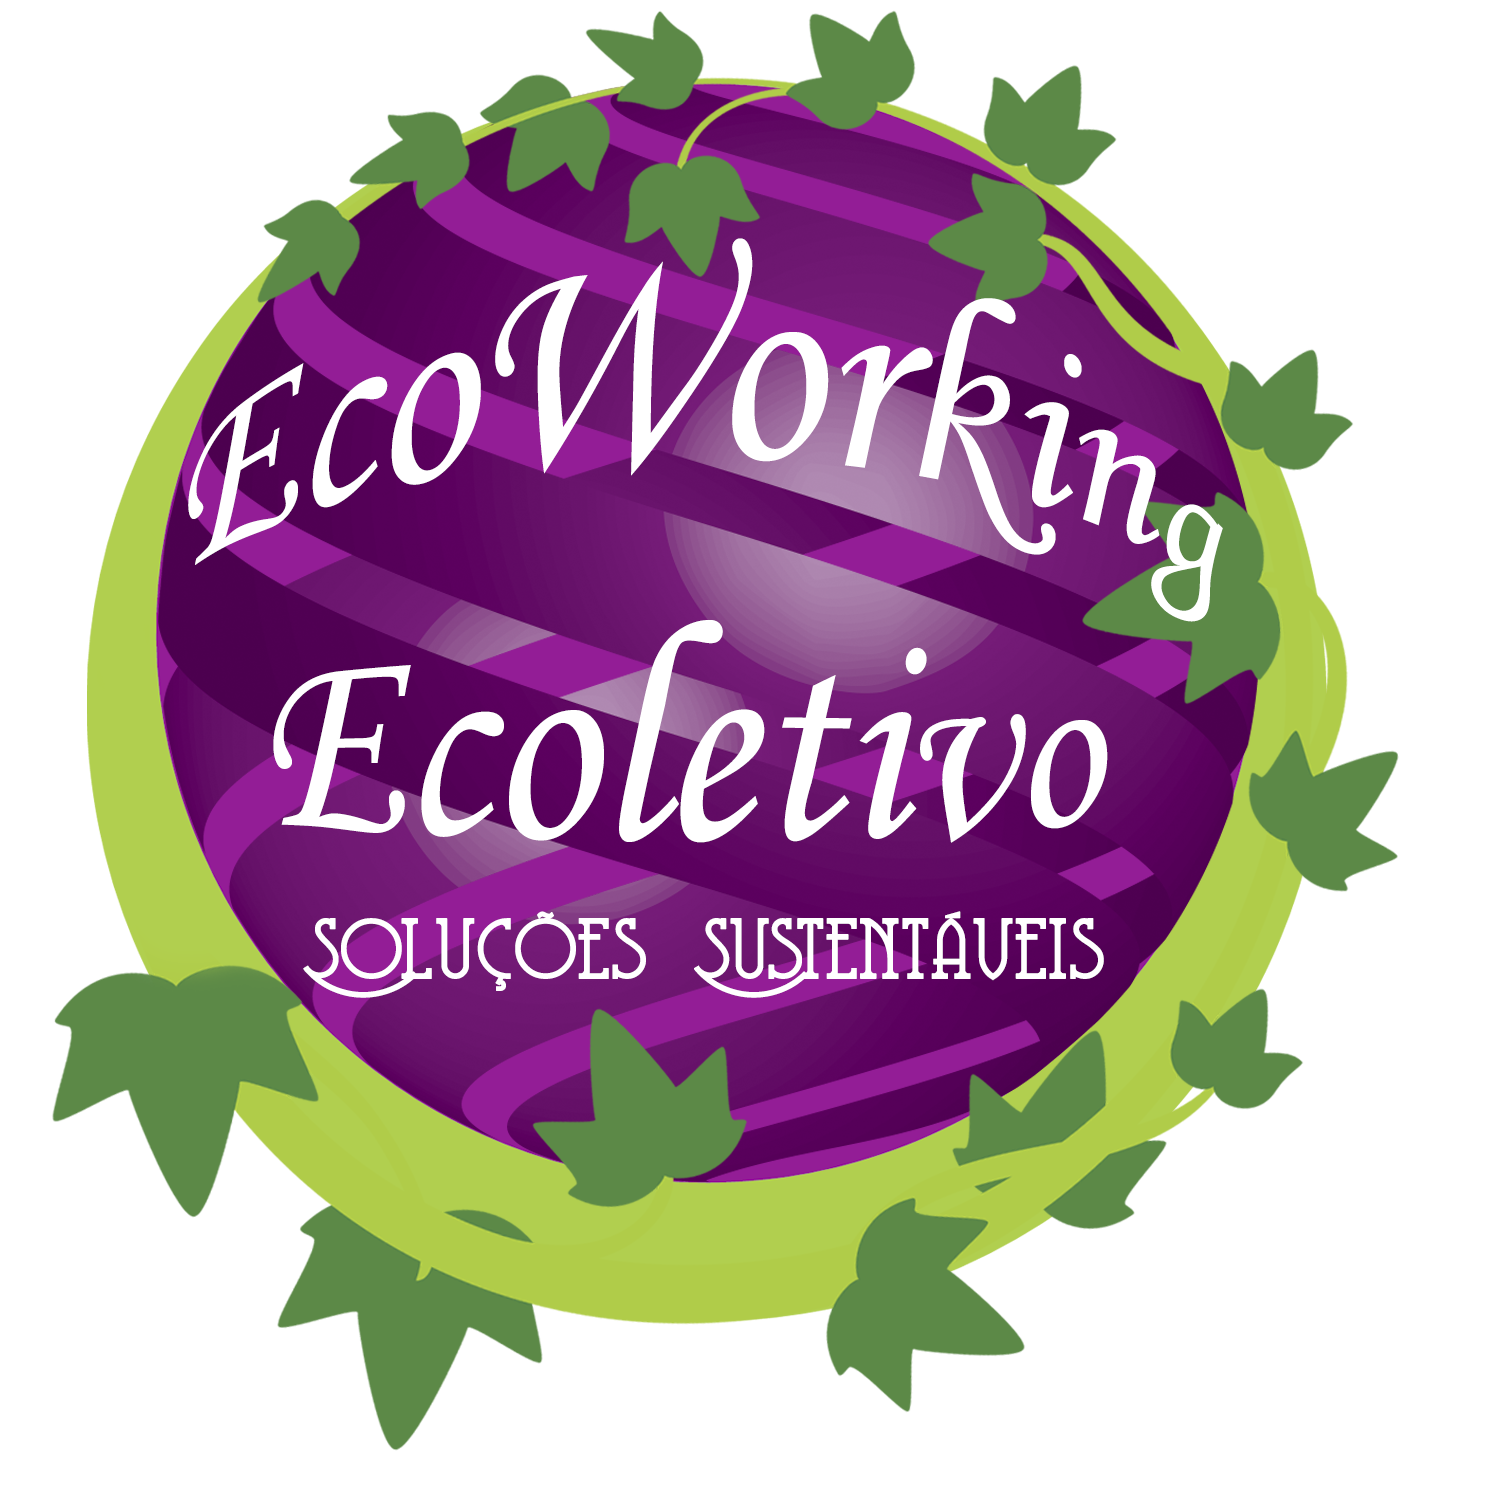 EcoWorking